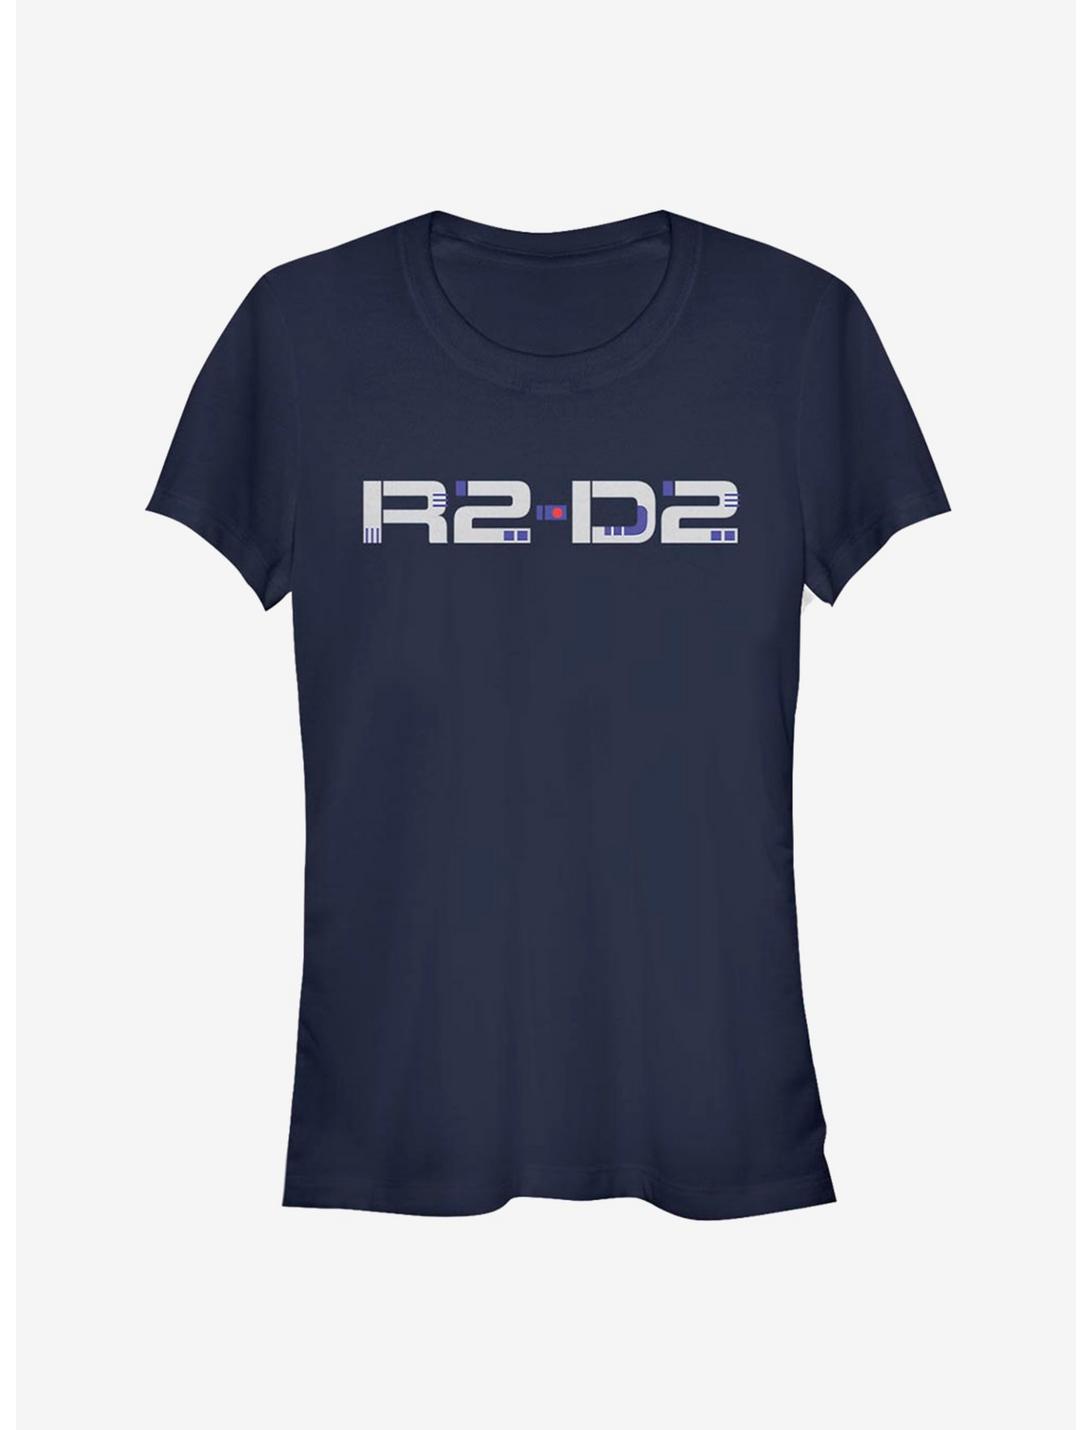 Star Wars Droid Design Girls T-Shirt, NAVY, hi-res